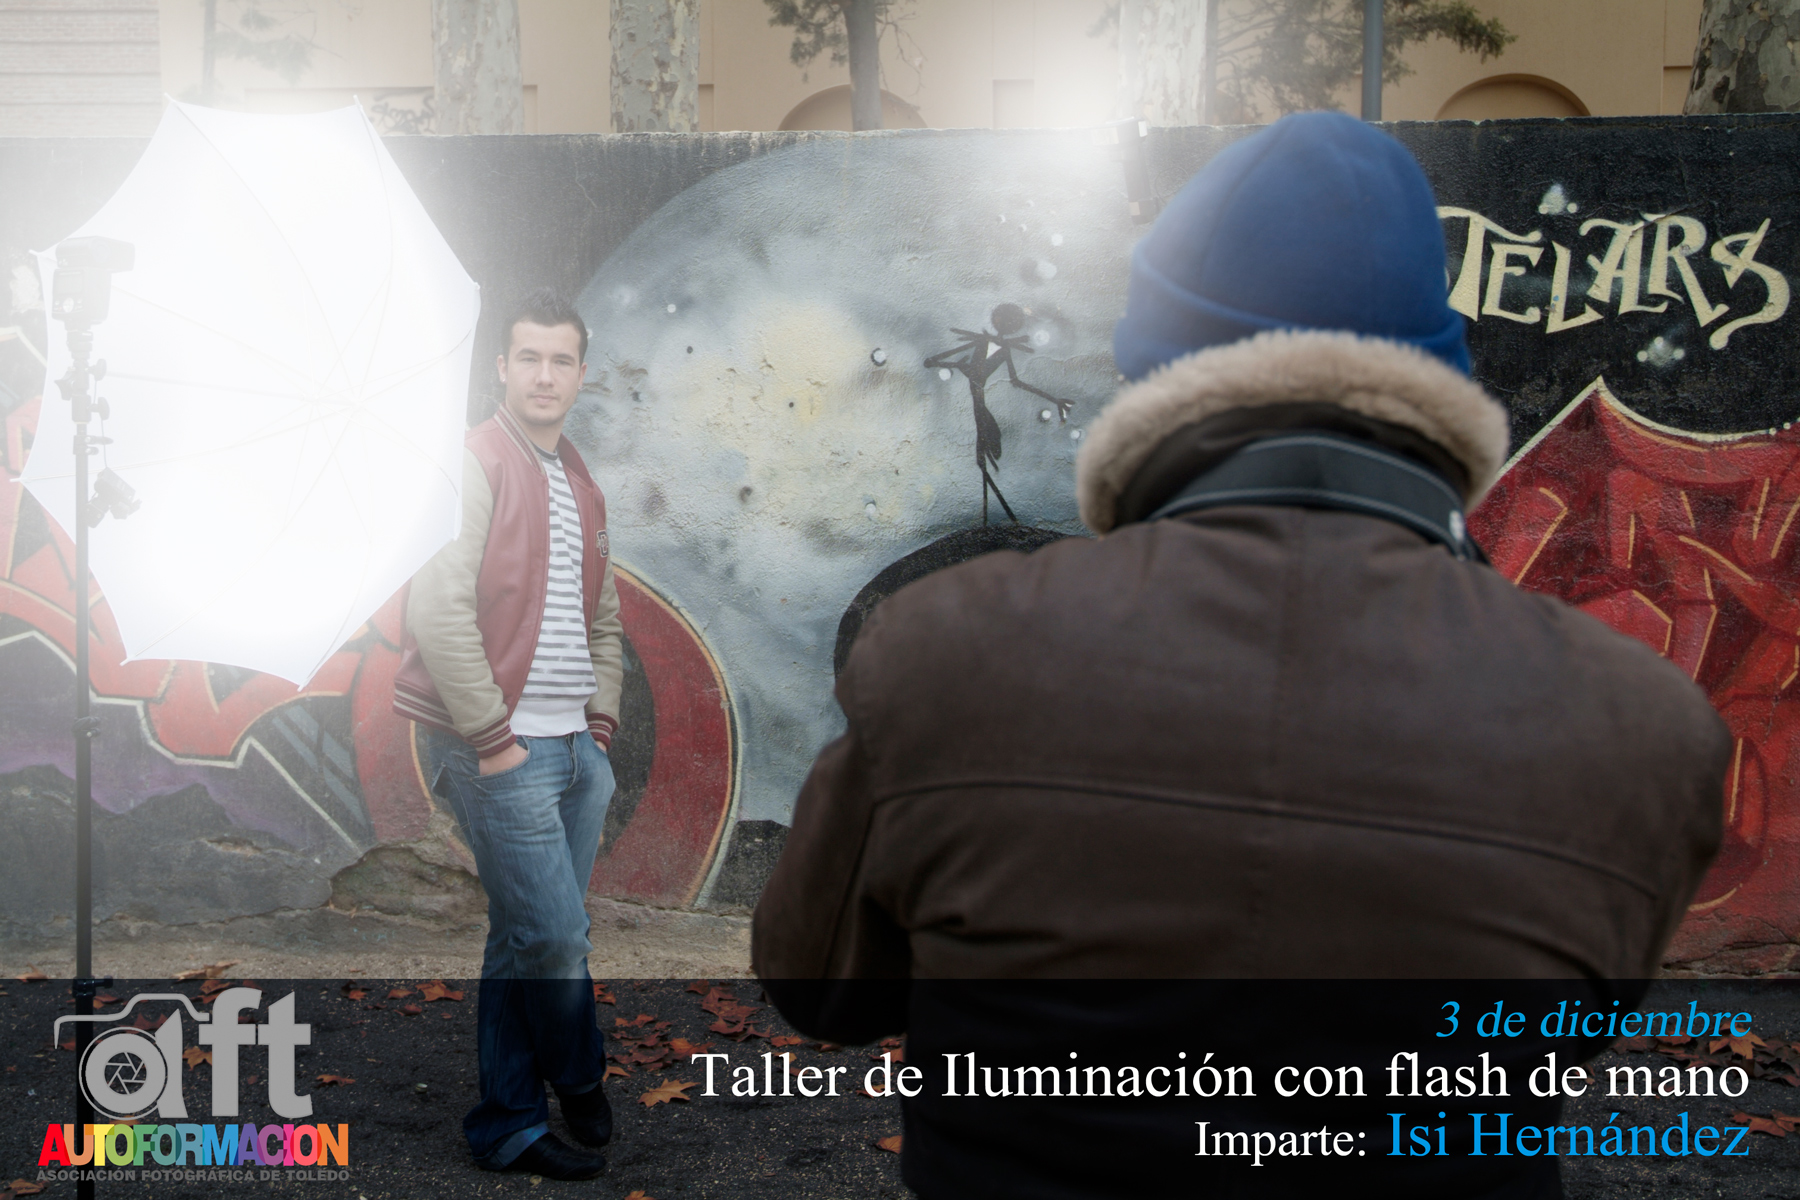 Taller de Iluminación con flash de mano, con Isi Hernández